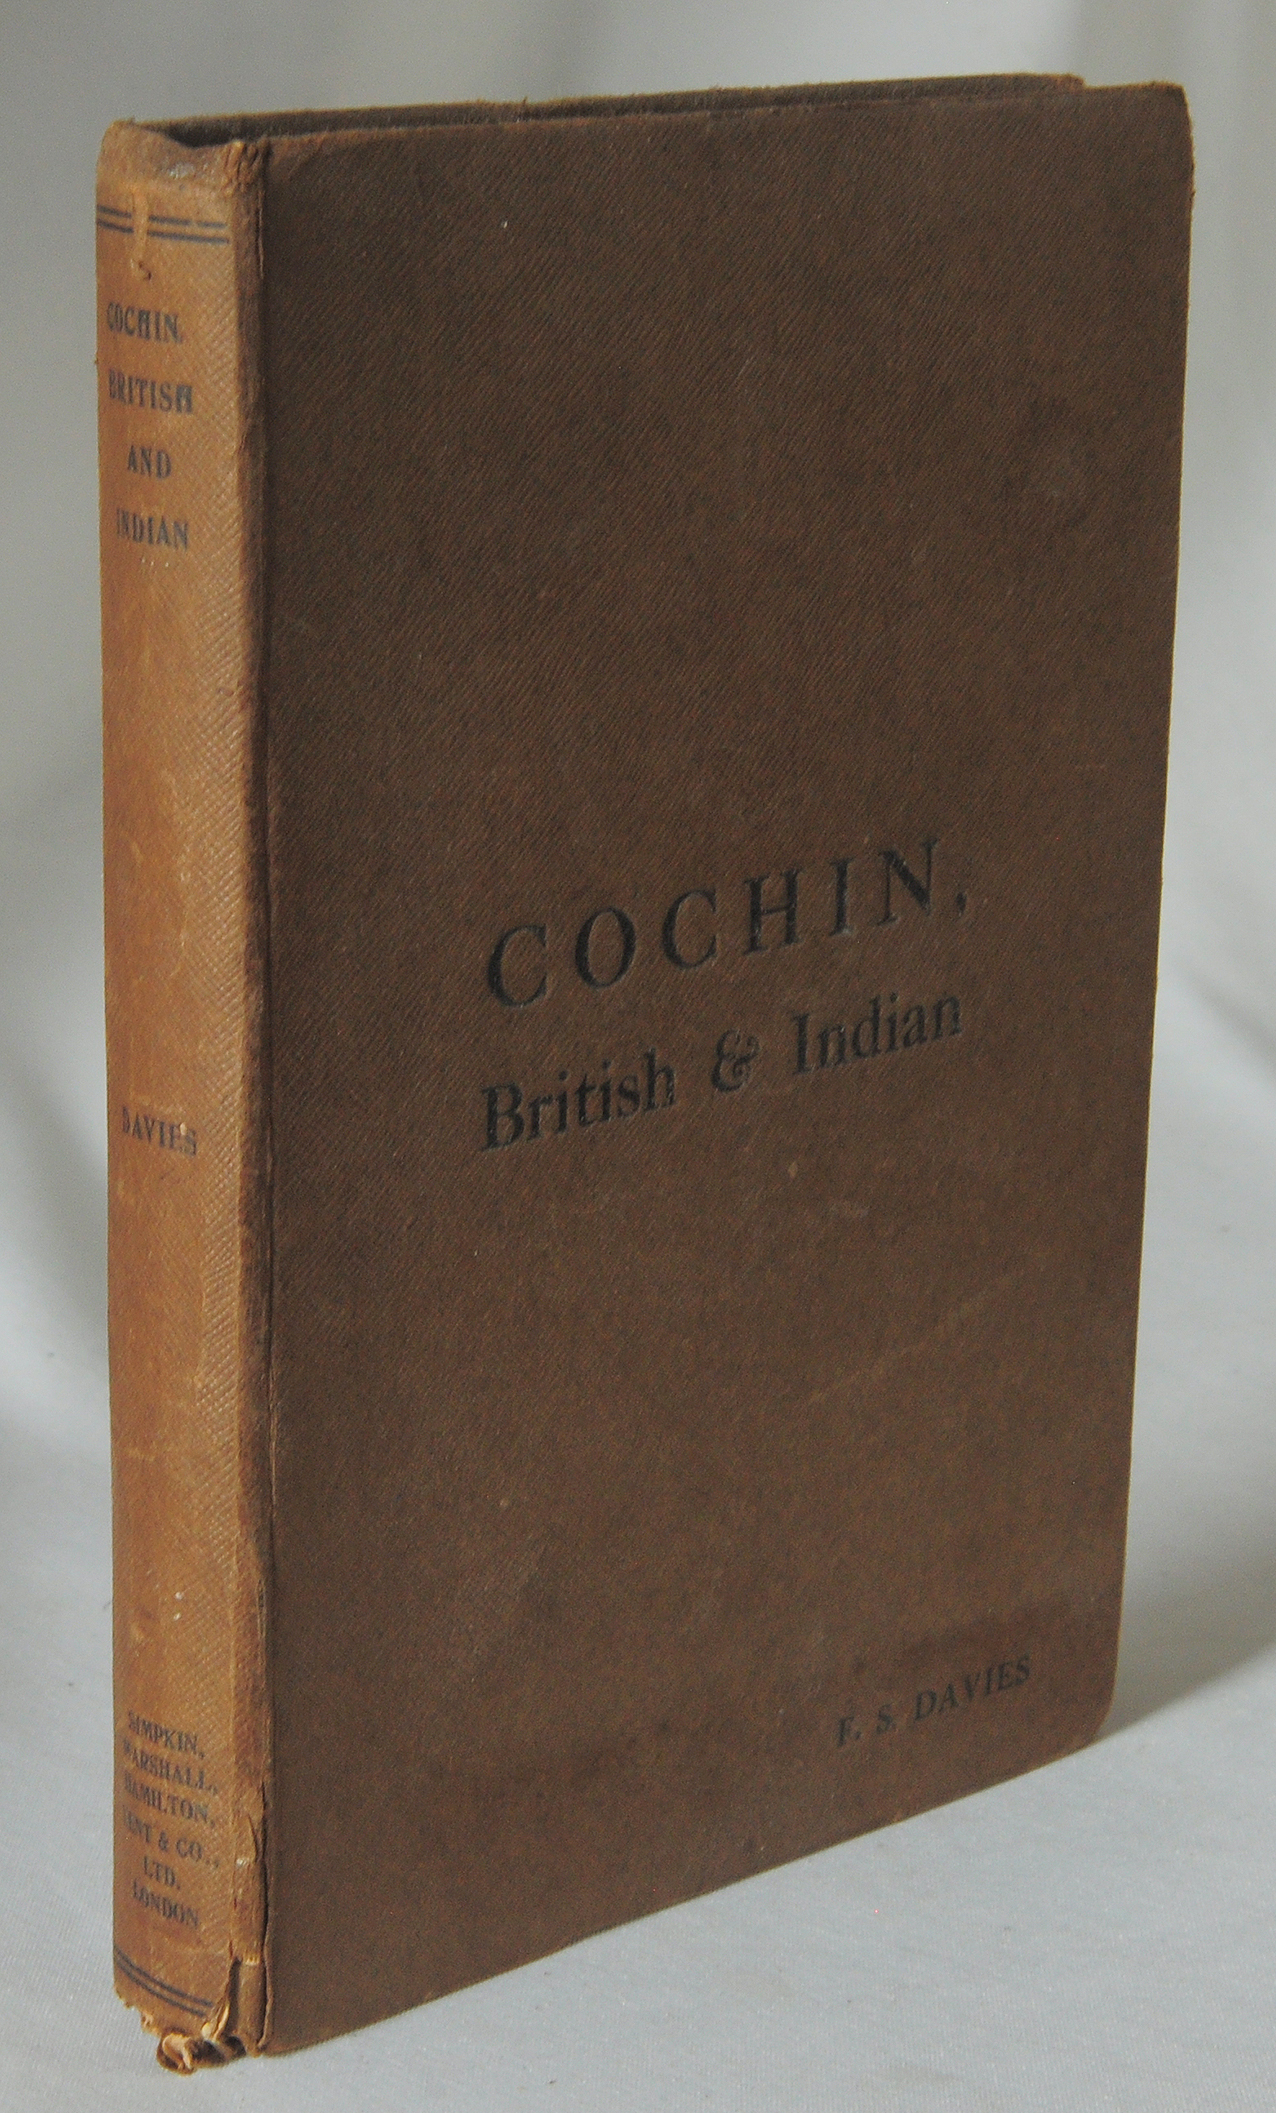 Vintage Book - Cochin British & Indian By F. S. Davies 1923